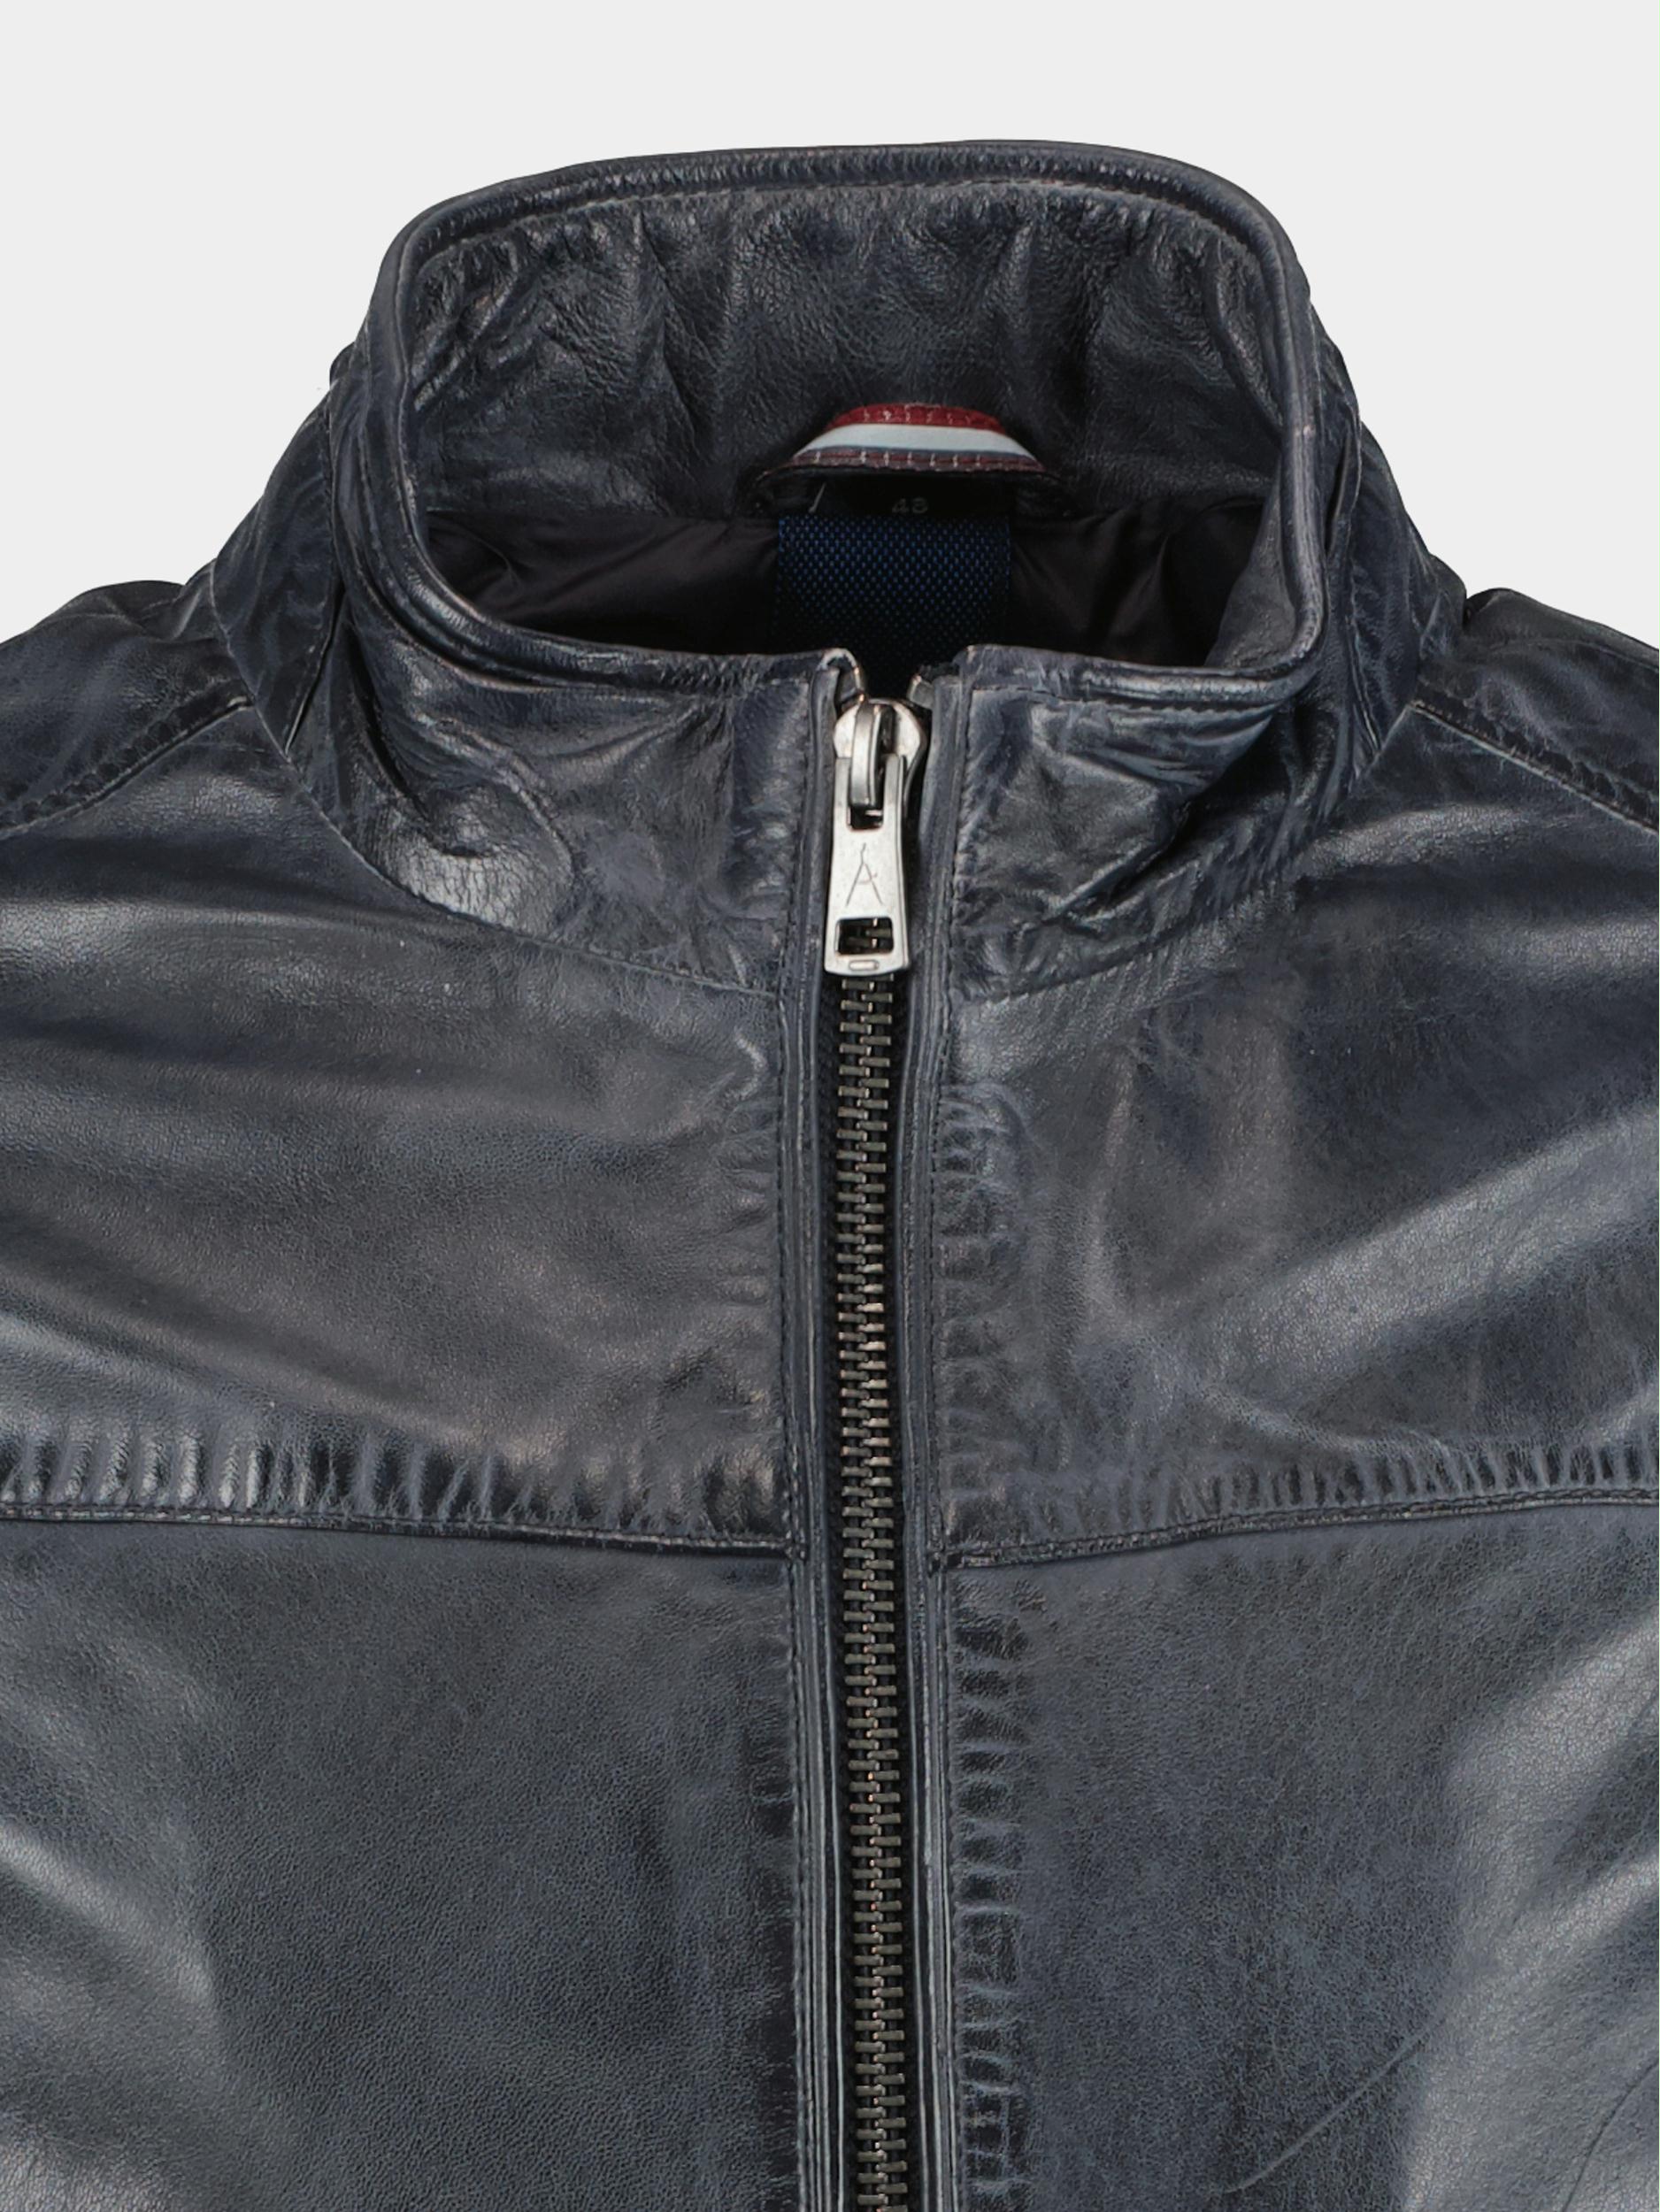 Donders 1860 Lederen jack Blauw Leather Jacket 52284/780